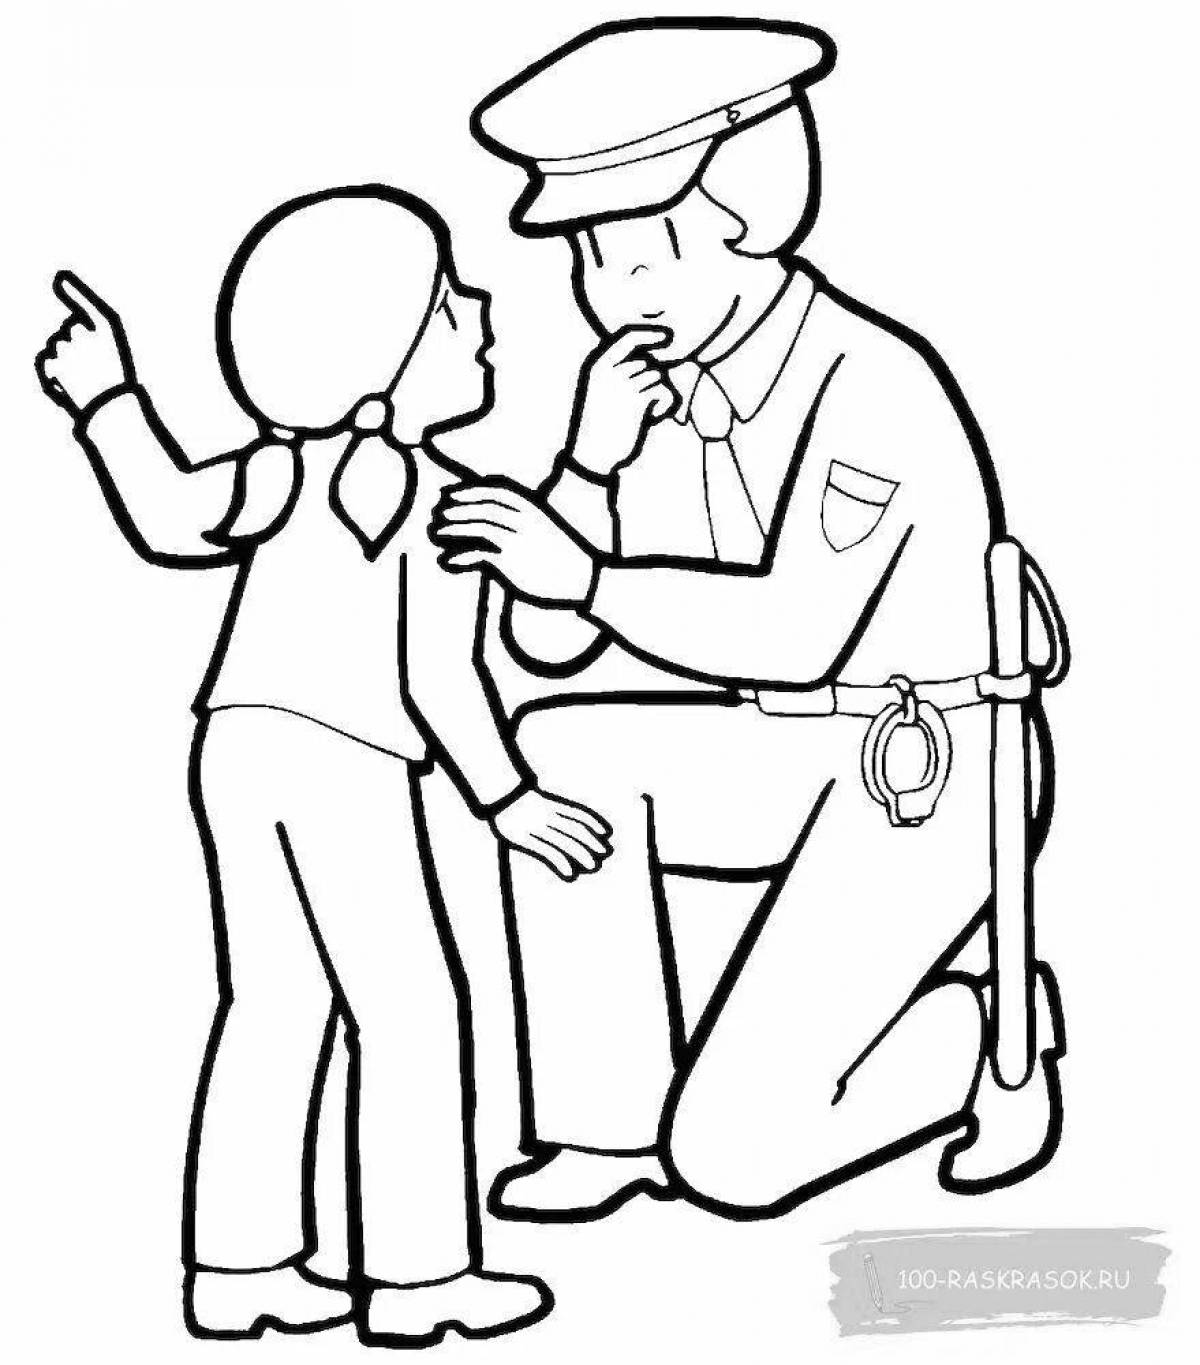 Cop kids coloring page